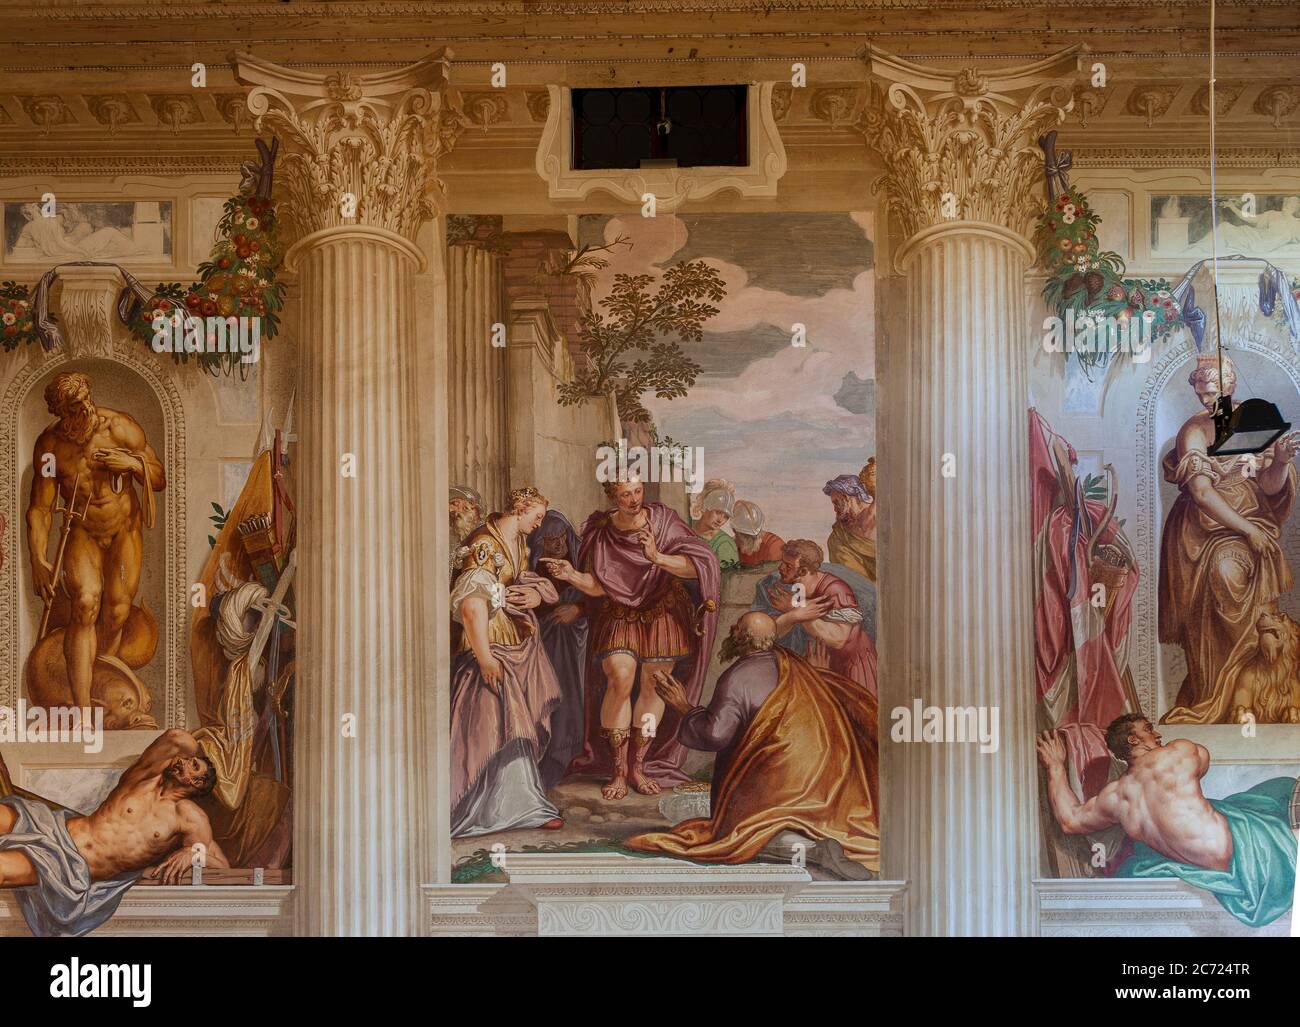 Italy Veneto Fanzolo - Villa Emo Architect Andrea Palladio - The Large Hall - Frescoes by Battista Zelotti Stock Photo